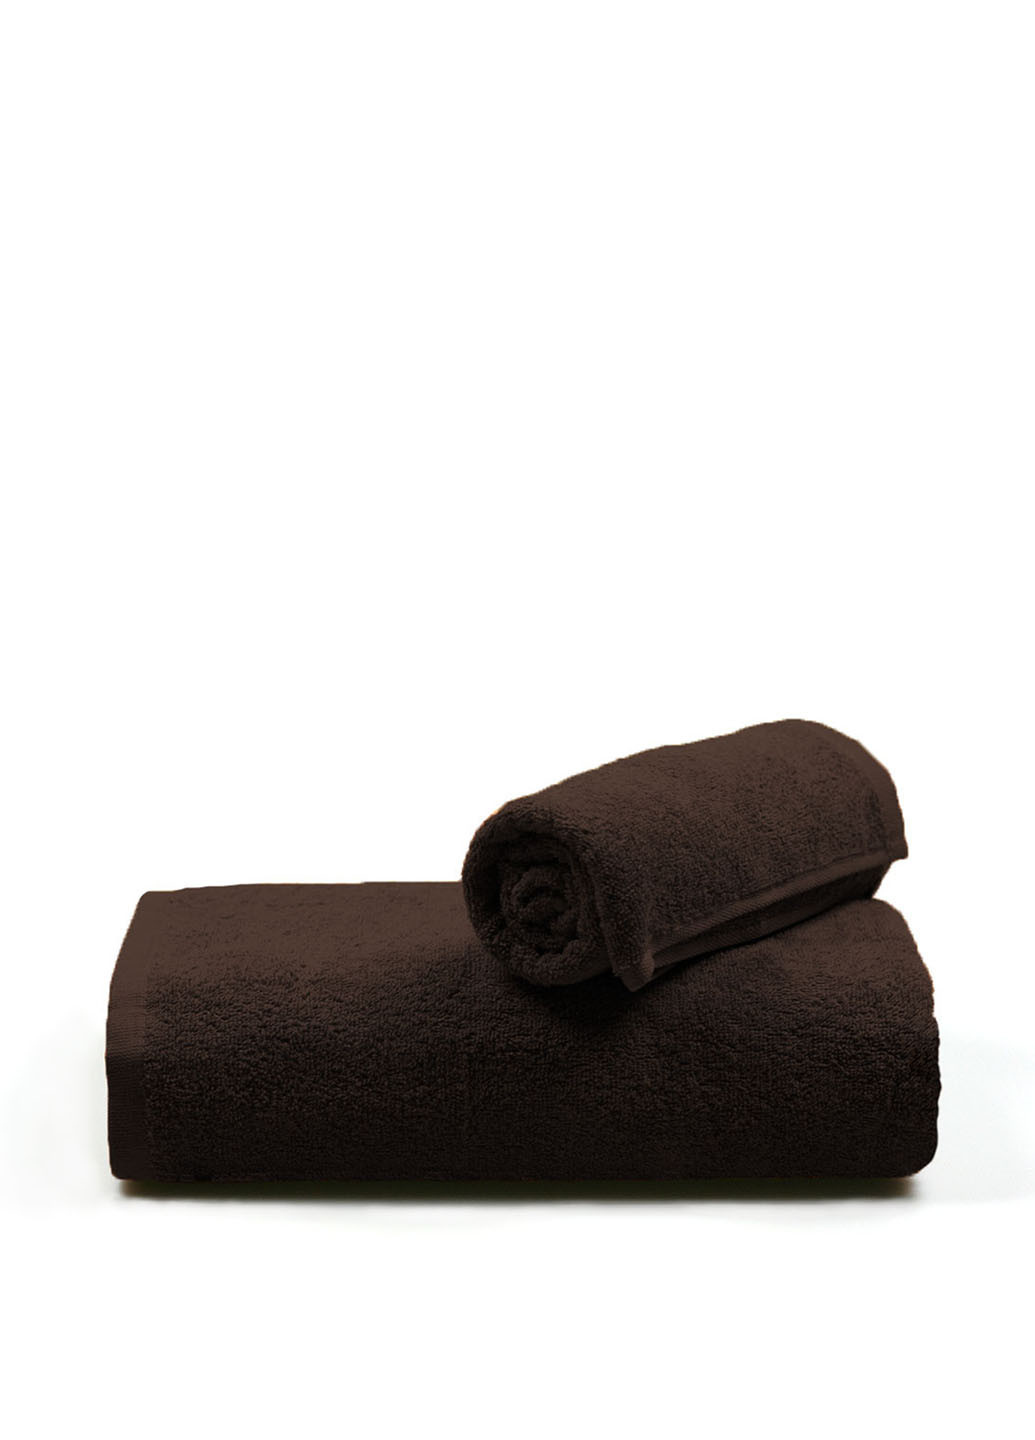 Home Line полотенце, 70х140 см однотонный шоколадный производство - Турция